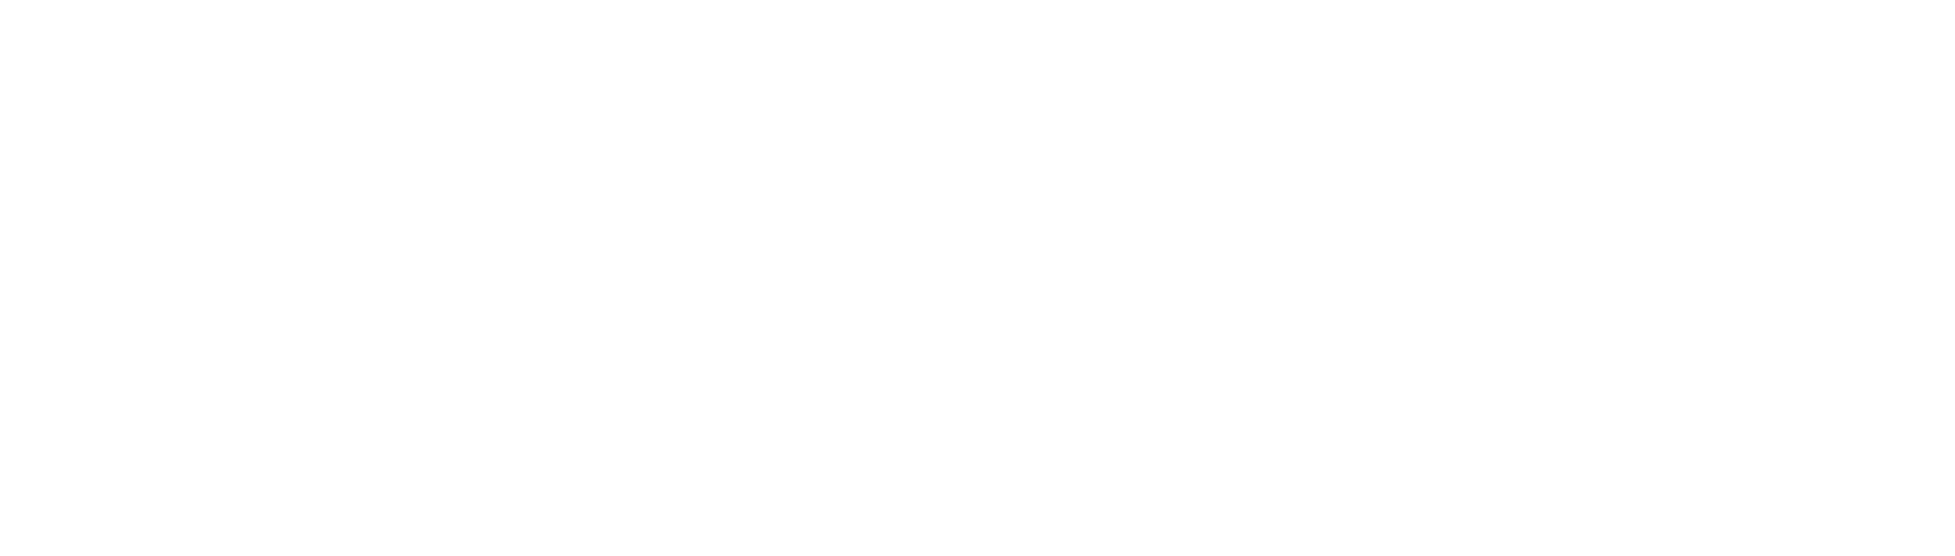 zappyn logo